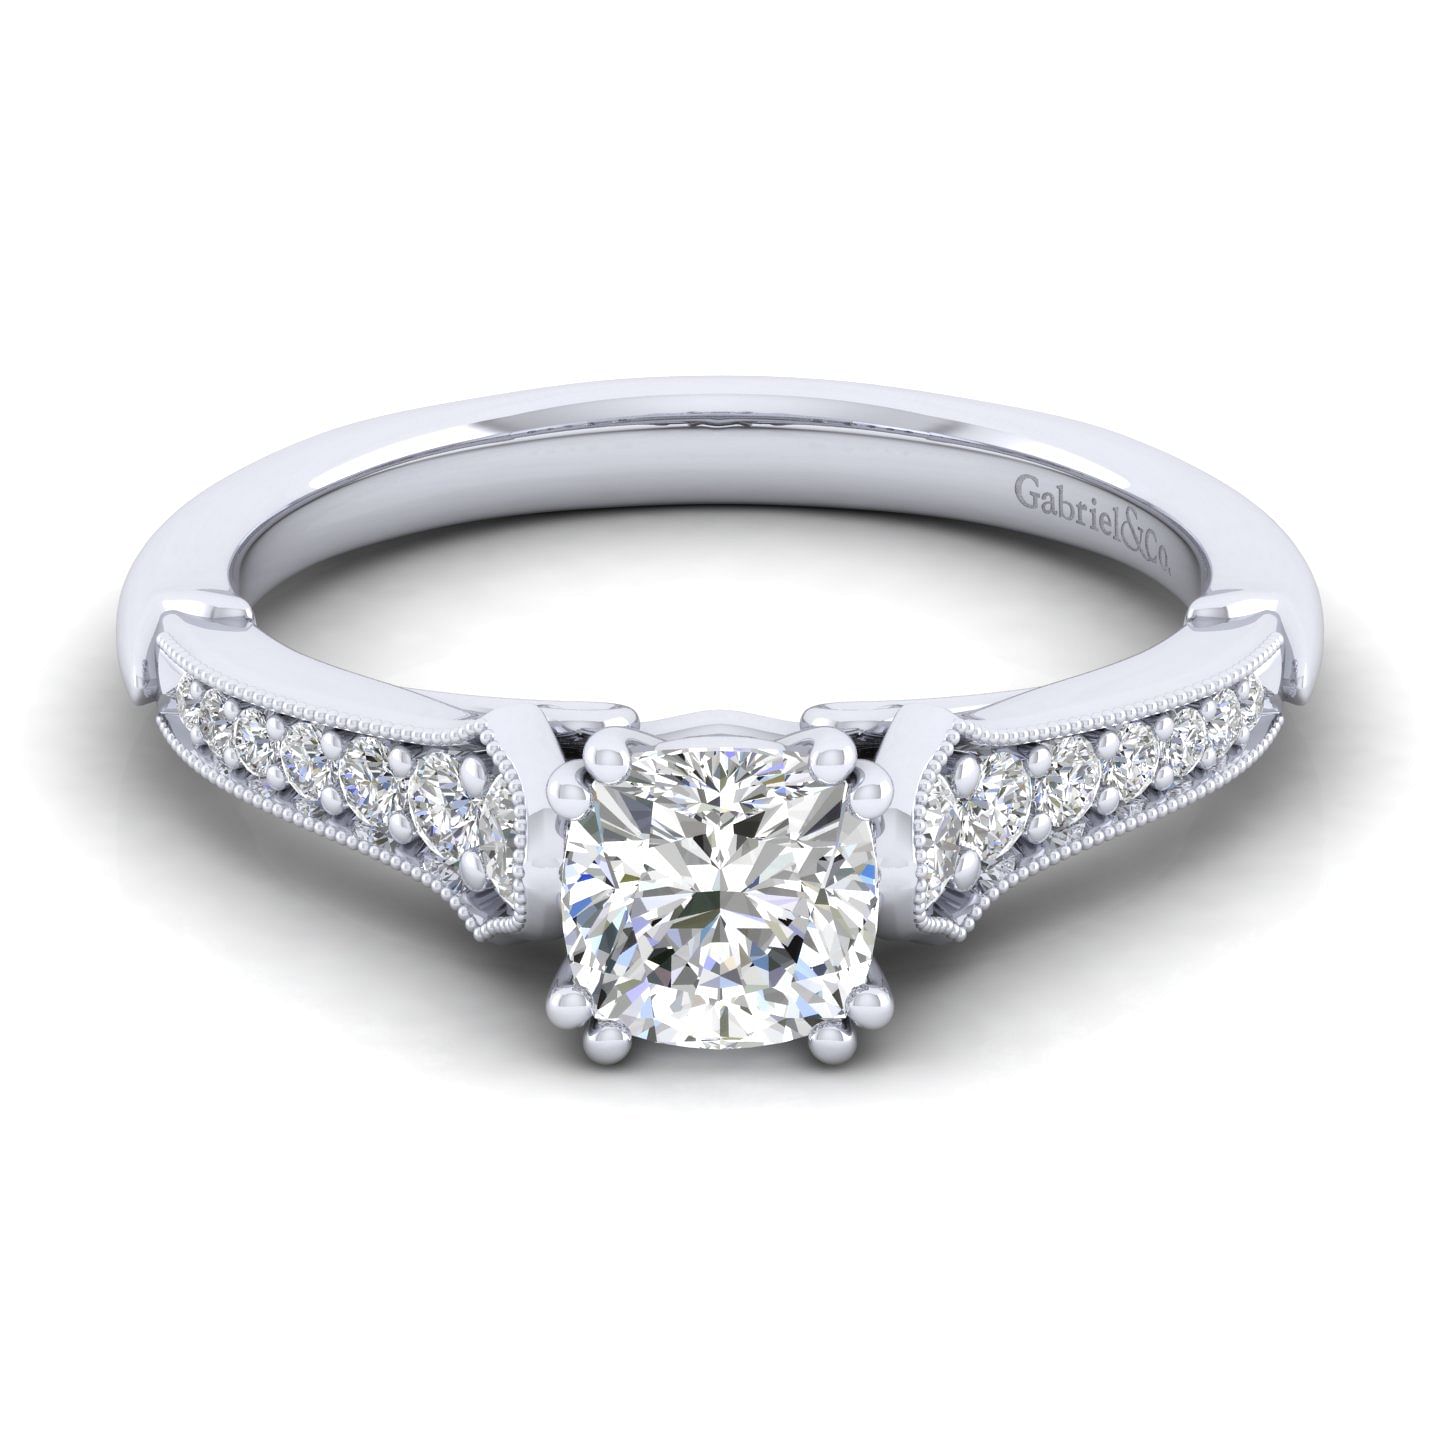 Hollis - 14K White Gold Cushion Cut Diamond Engagement Ring